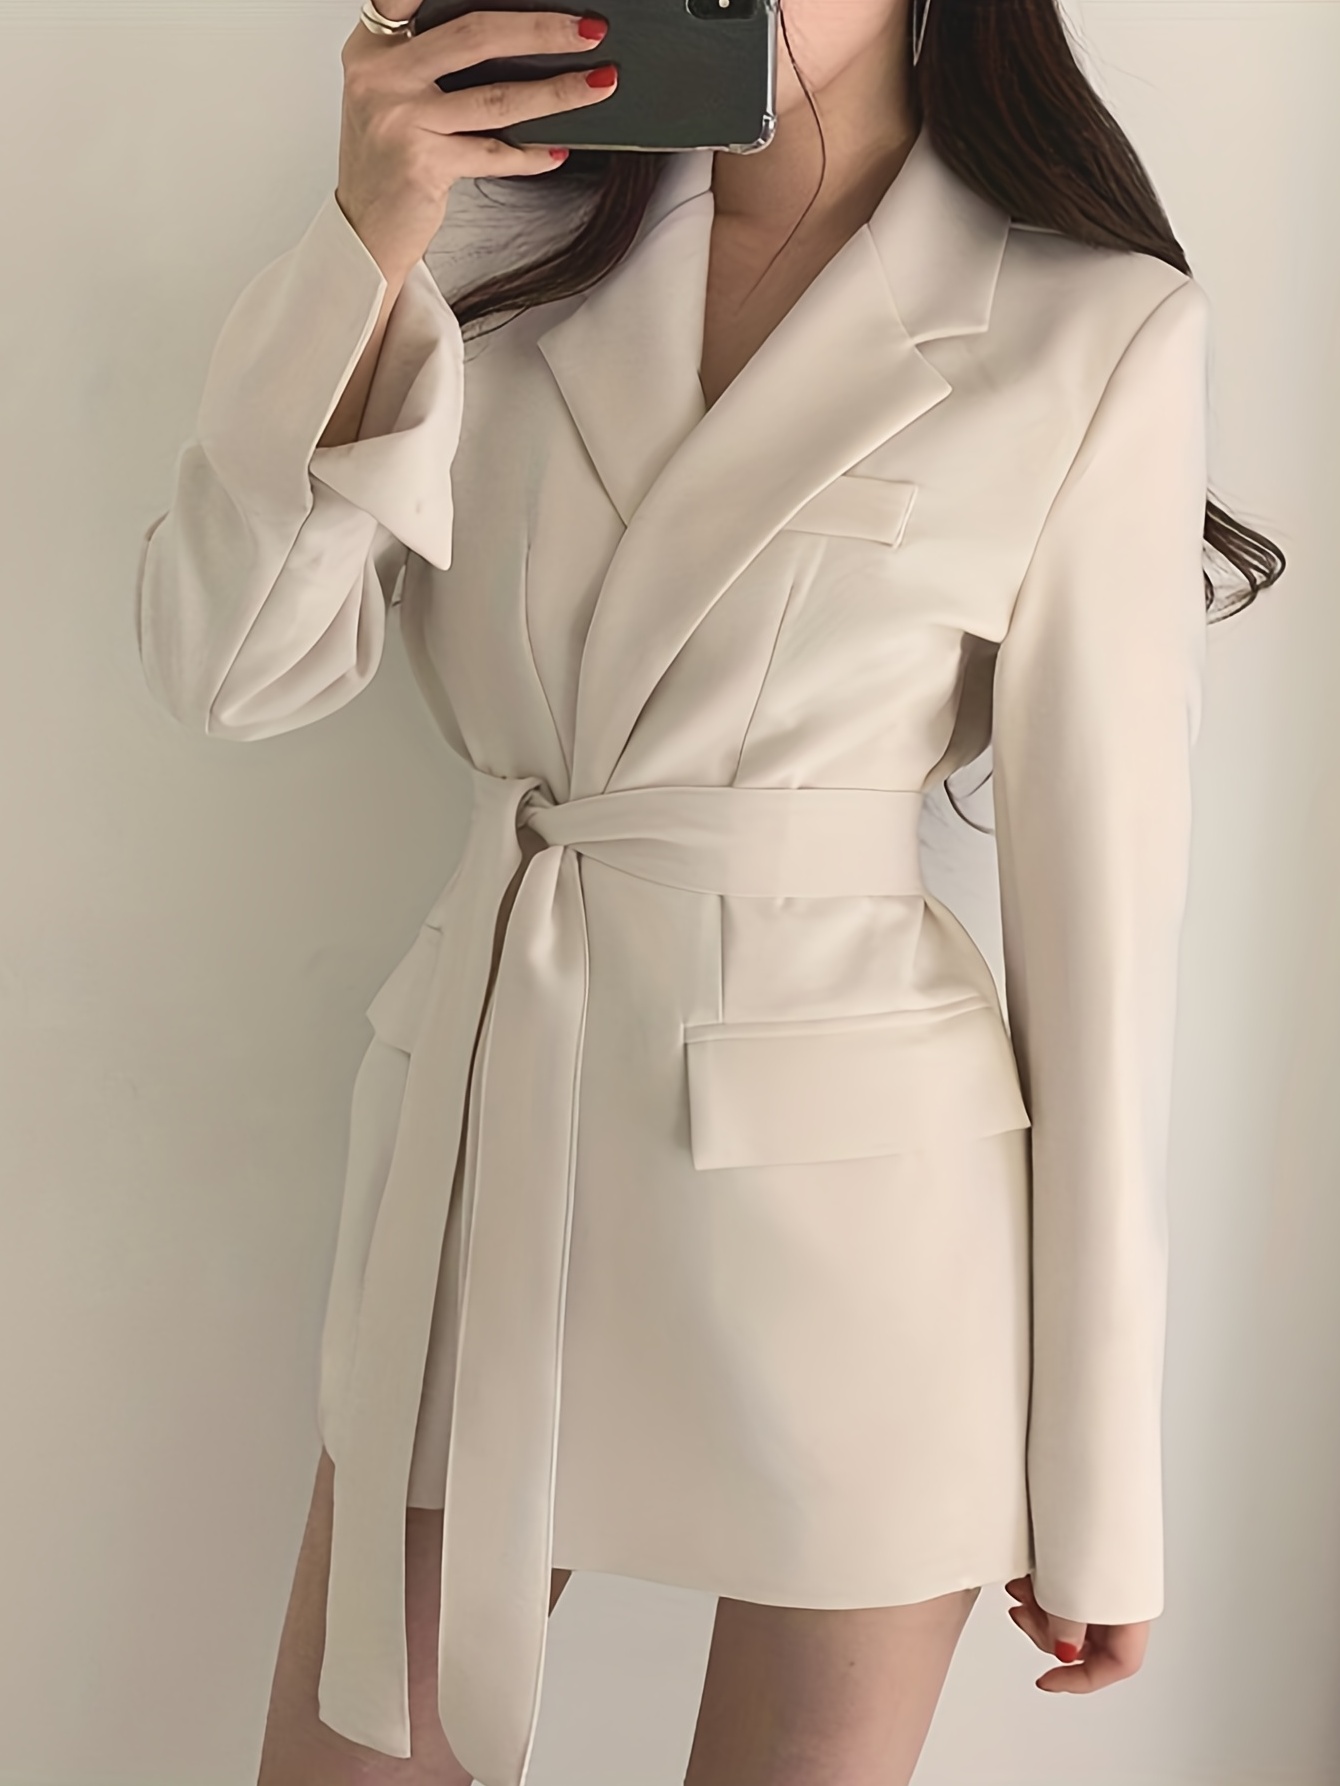 Solid Lapel Blazer, Elegant Long Sleeve Work Office Outerwear, Women’s Clothing